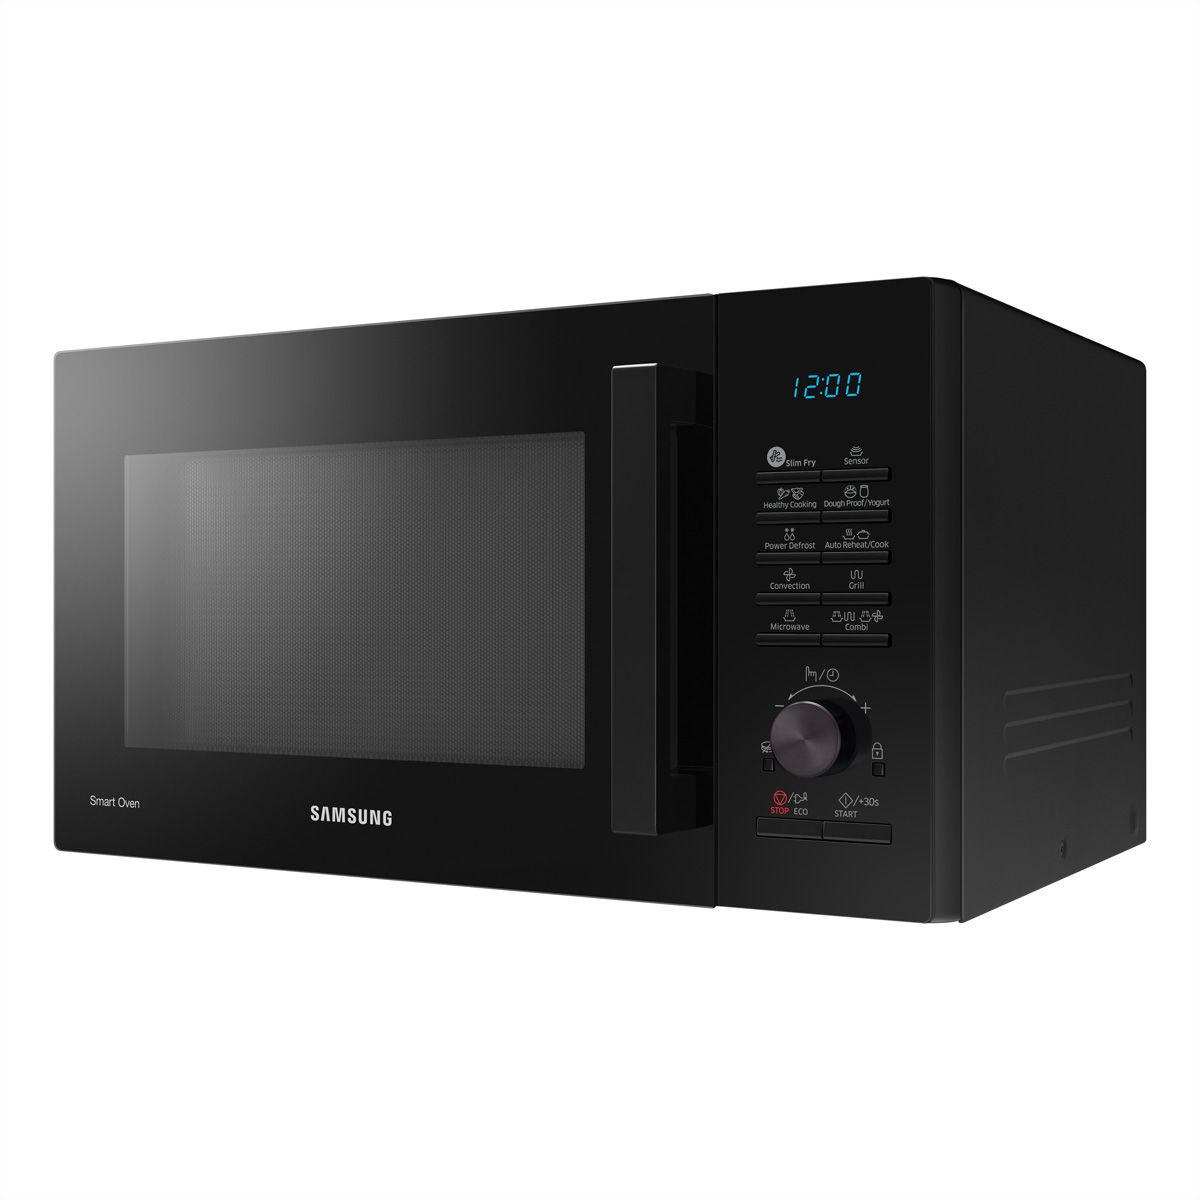 Samsung Smart Oven & Heissluft-Mikrowelle MW5100H, schwarz - SECOMP AG